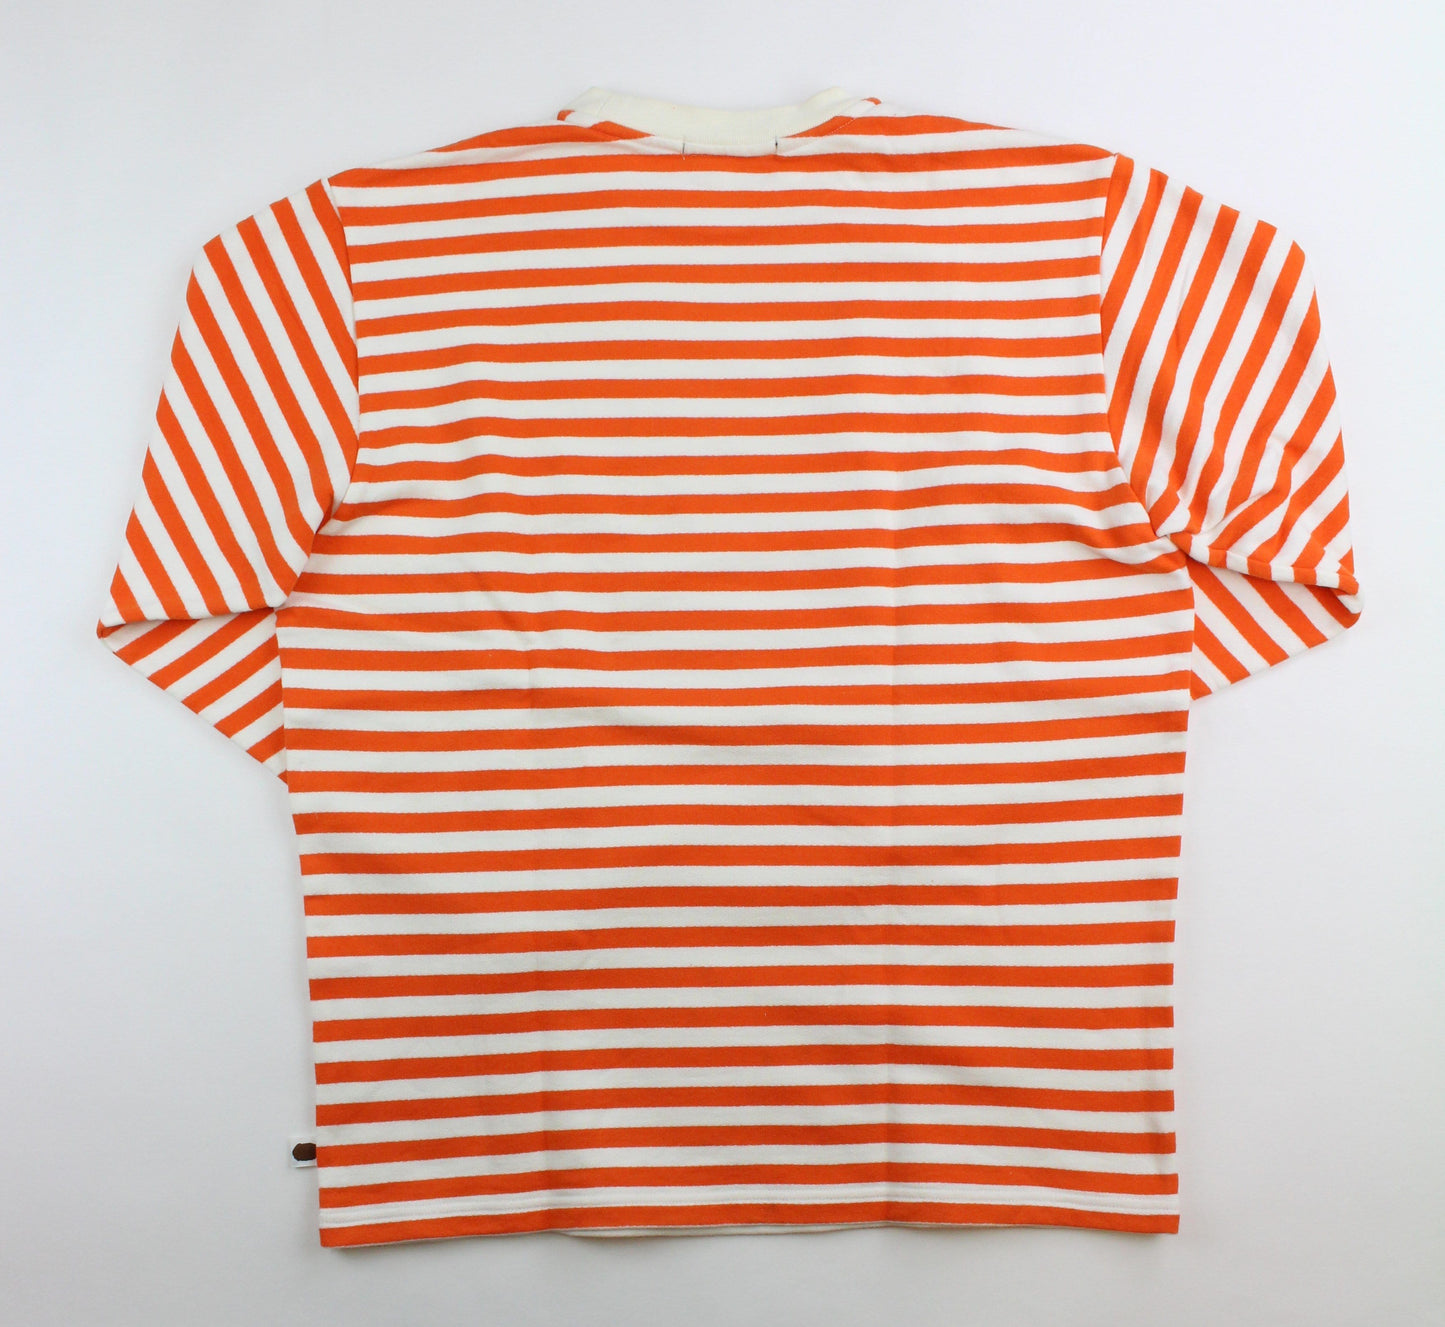 Bape Orange Stripe LS White - SaruGeneral